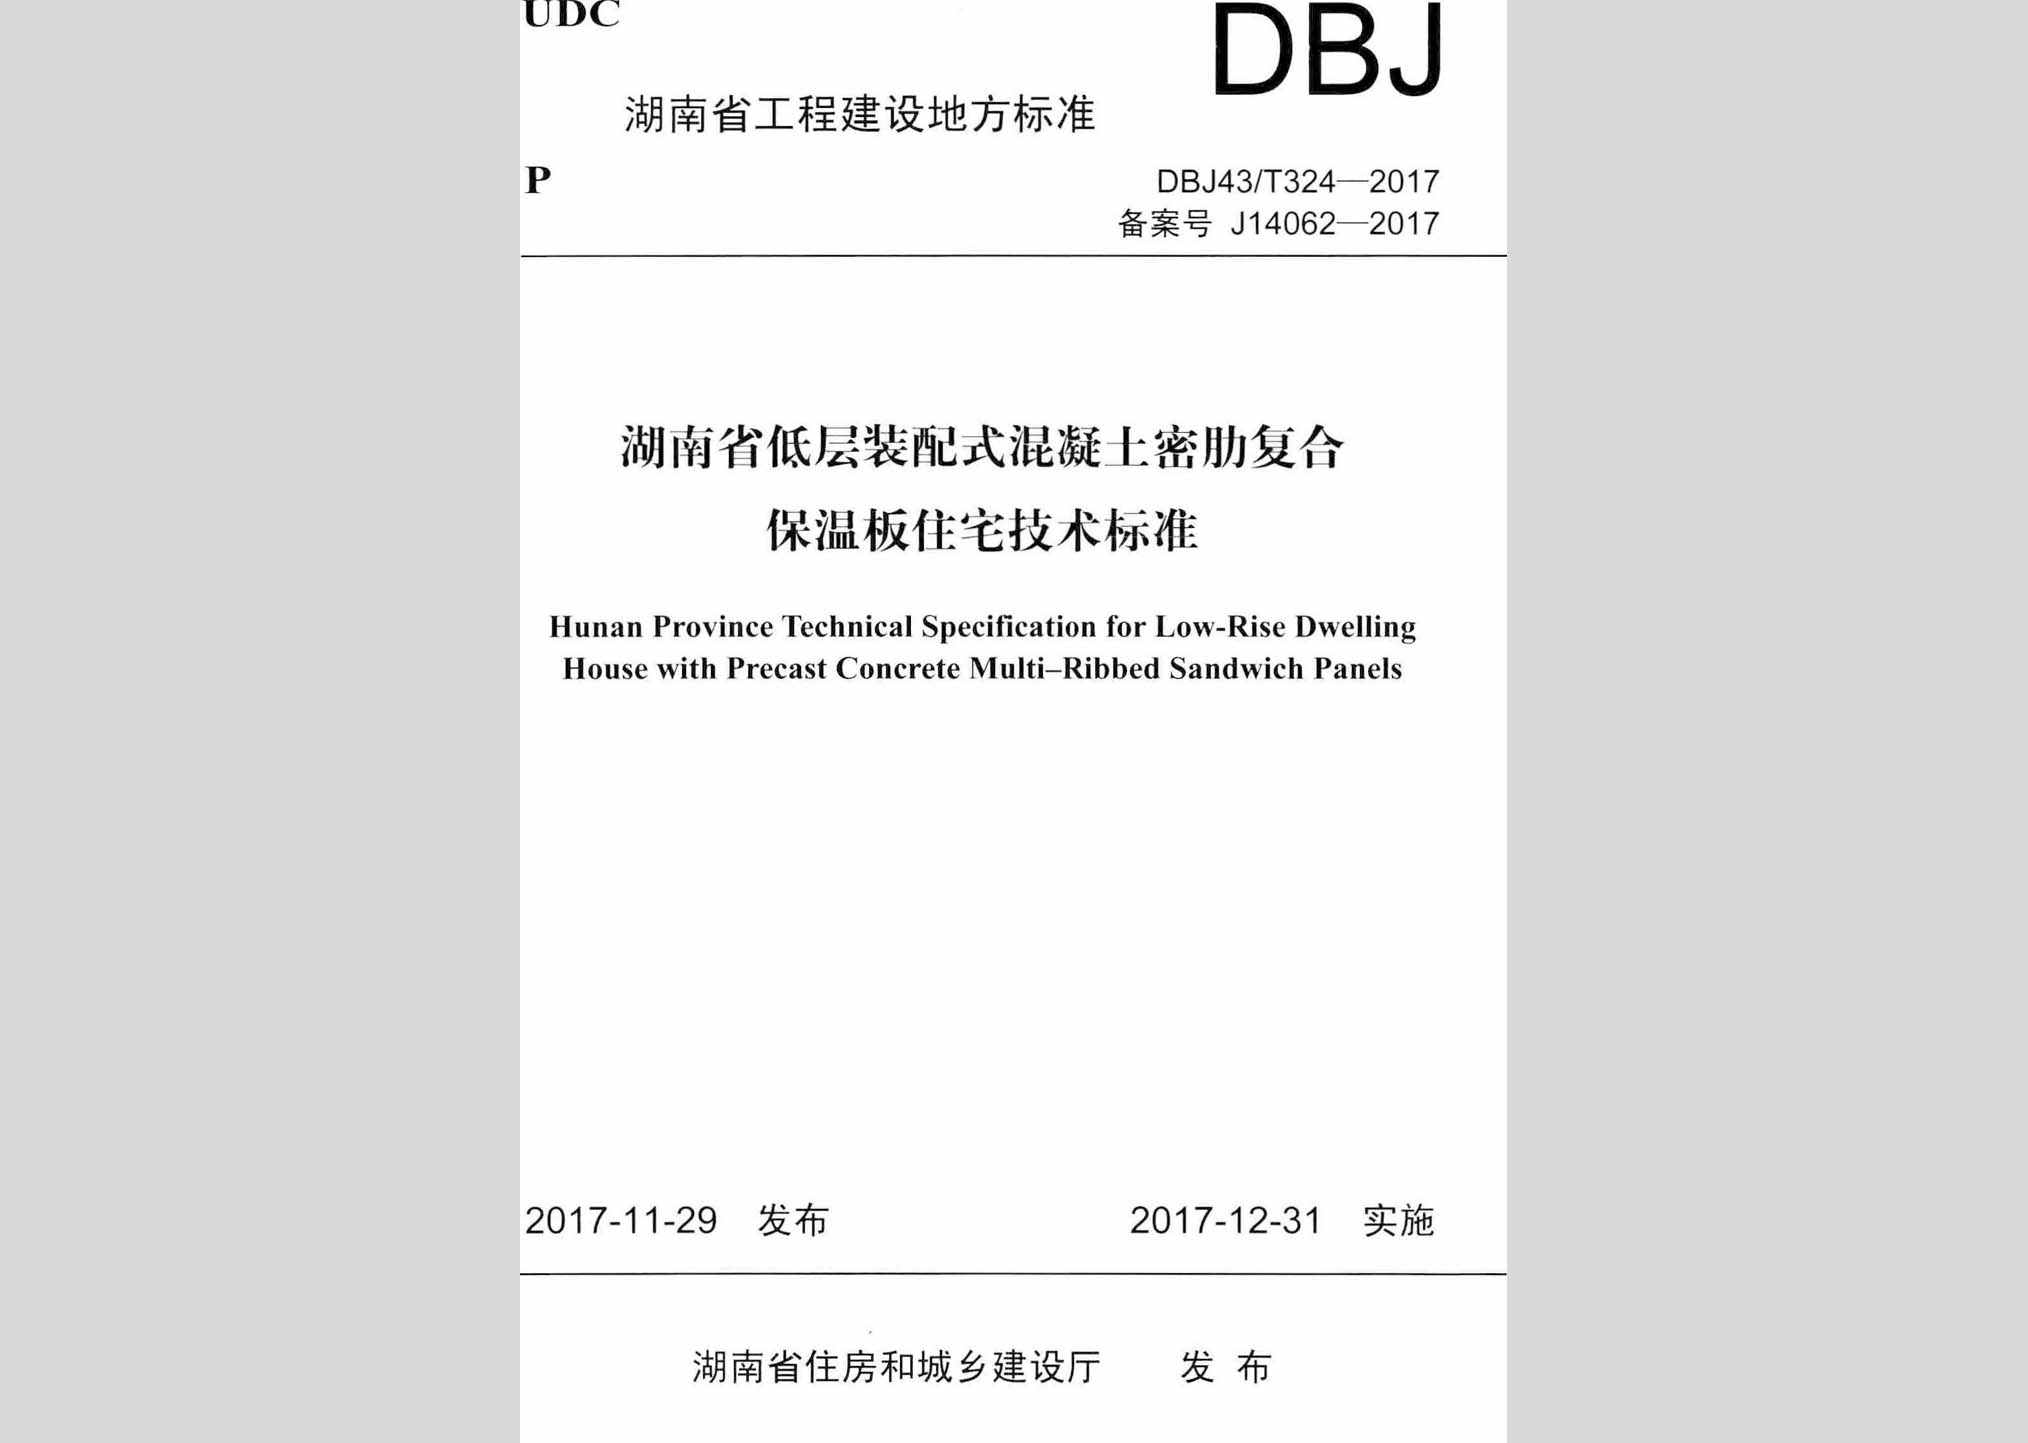 DBJ43/T324-2017：湖南省低层装配式混凝土密肋复合保温板住宅技术标准